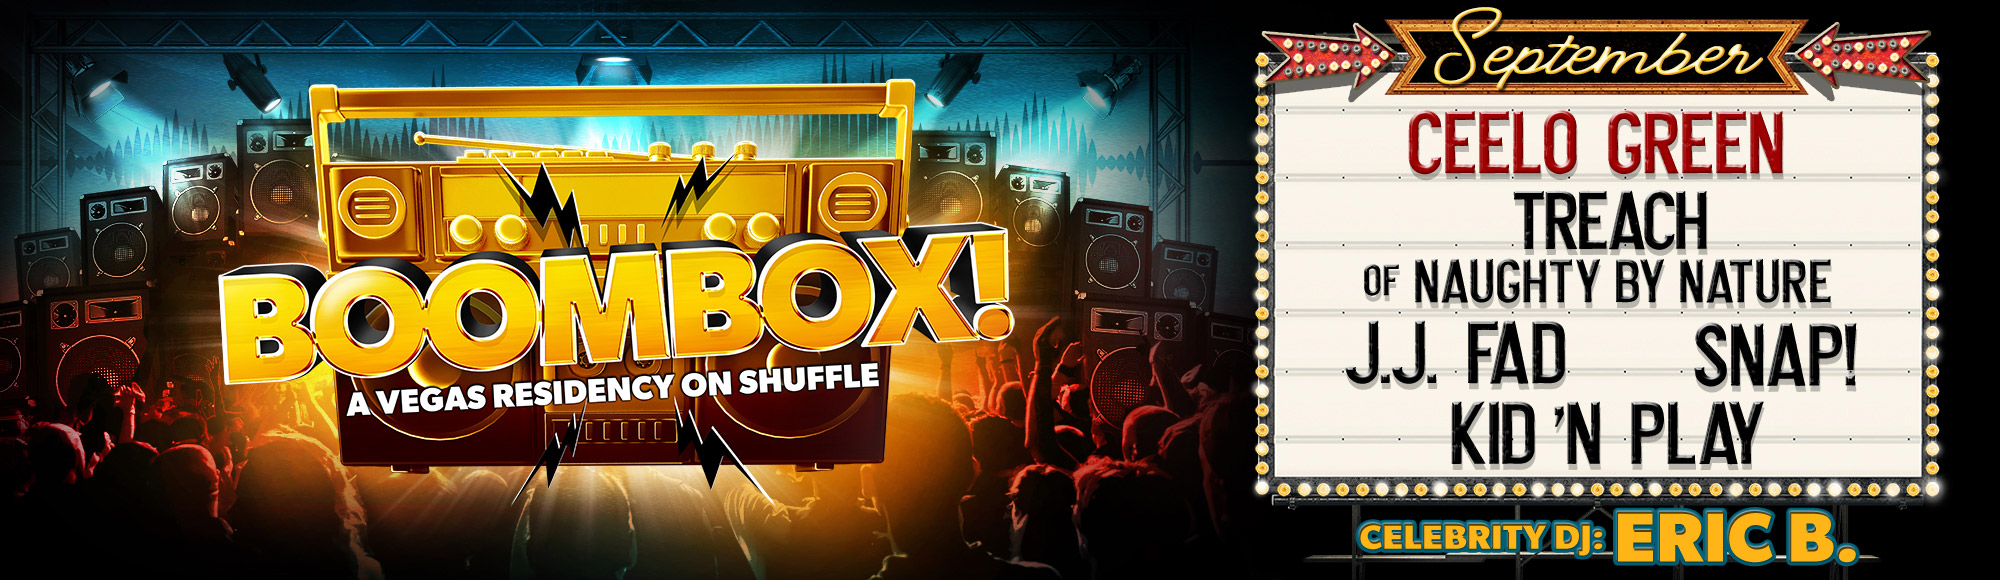 BOOMBOX! A Vegas Residency On Shuffle show